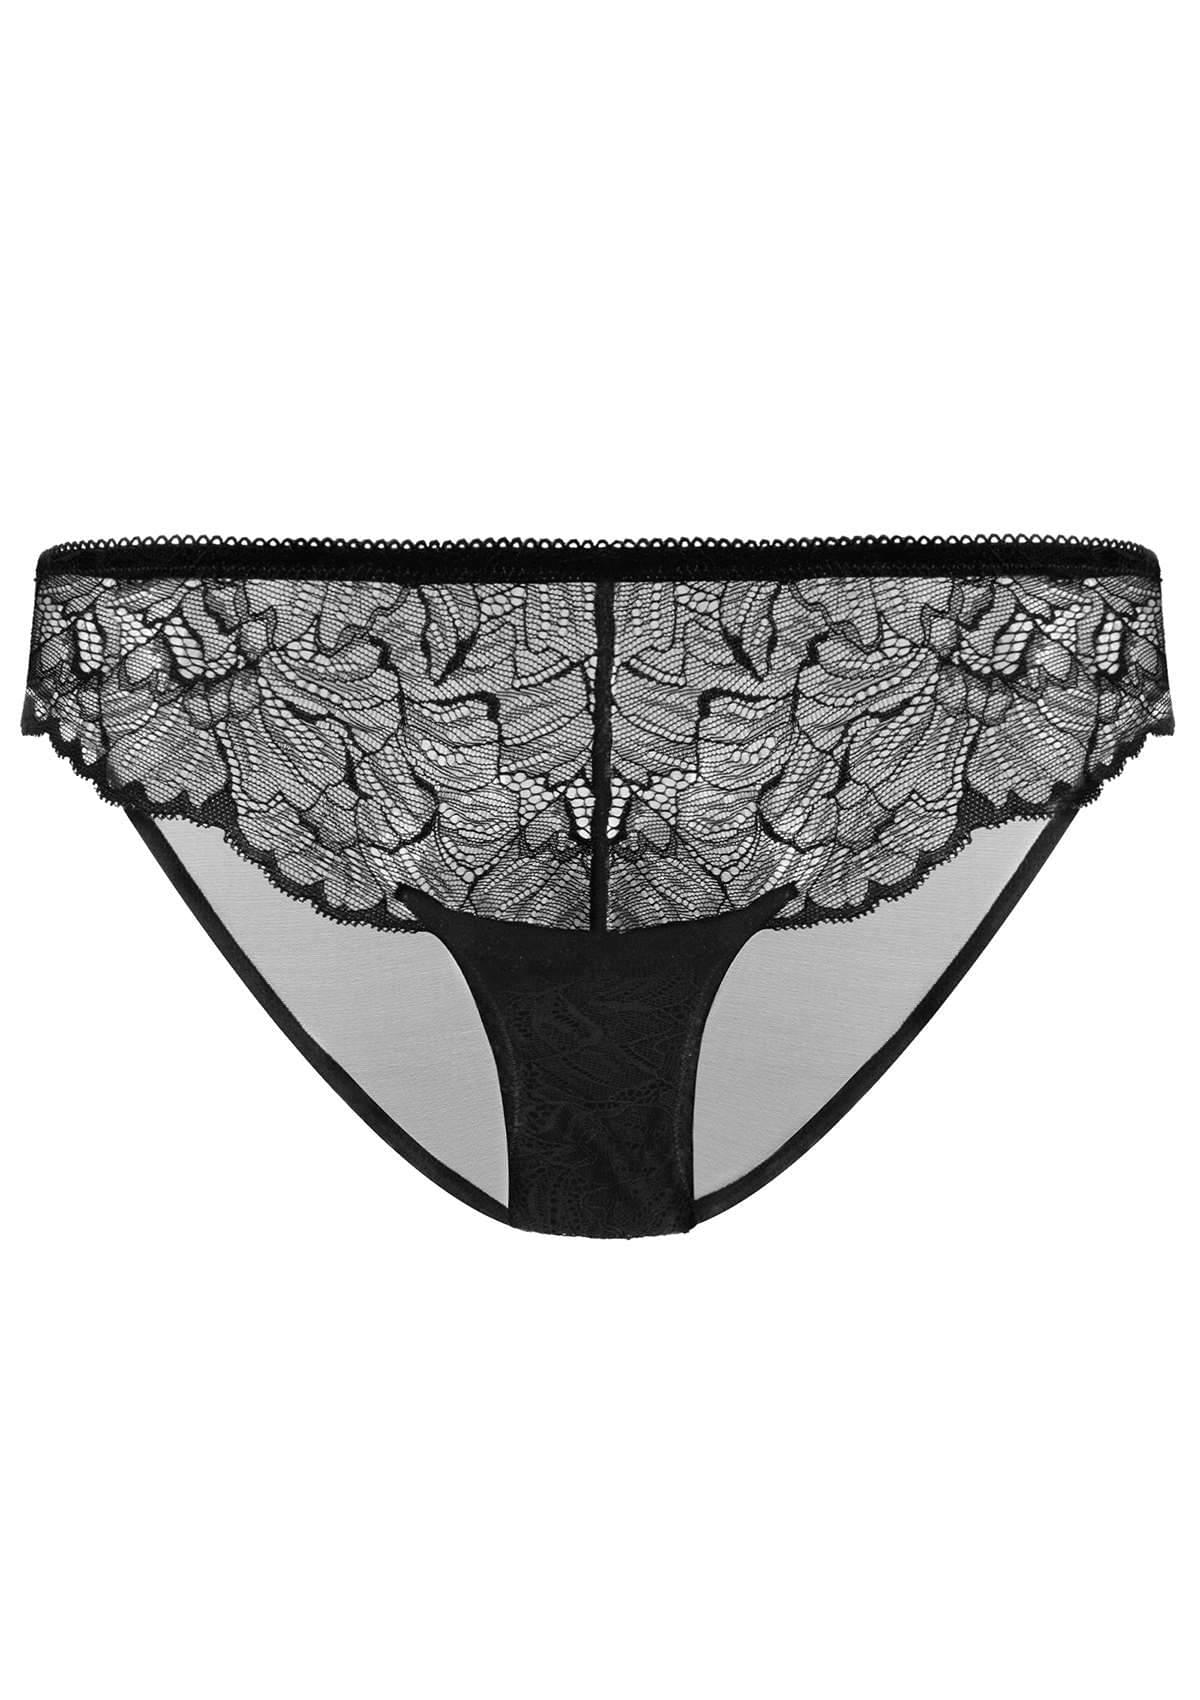 HSIA Blossom Mid-Rise Breathable Delicate Floral Lacy Pantie  - XXXL / Black / Bikini